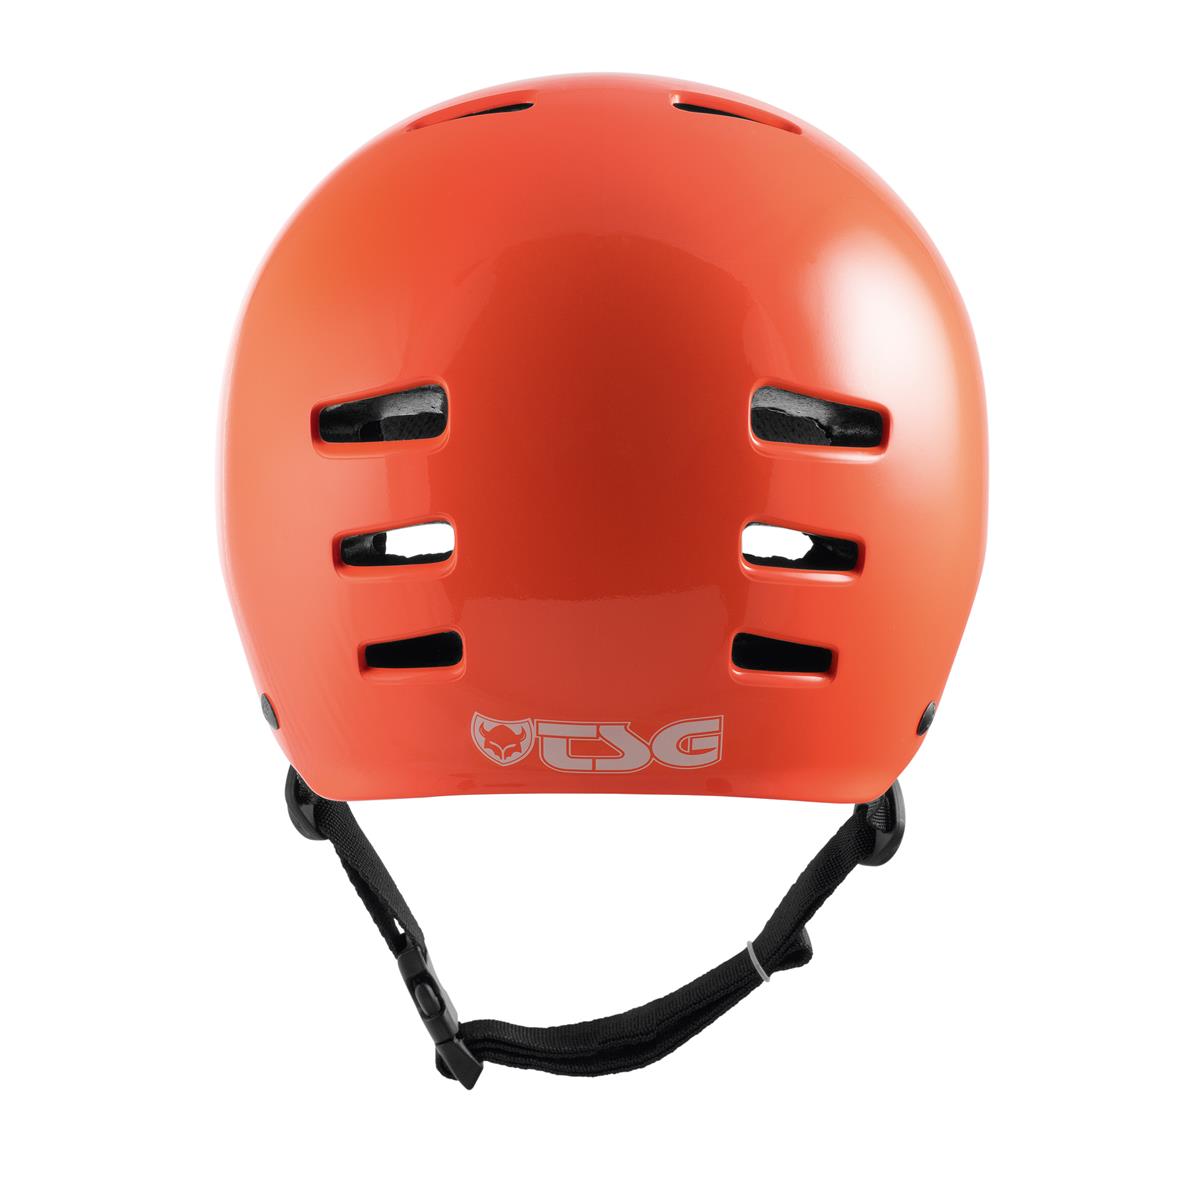 TSG Adult Helmet Pad Kits Heat Sealed Pads for Bicycle